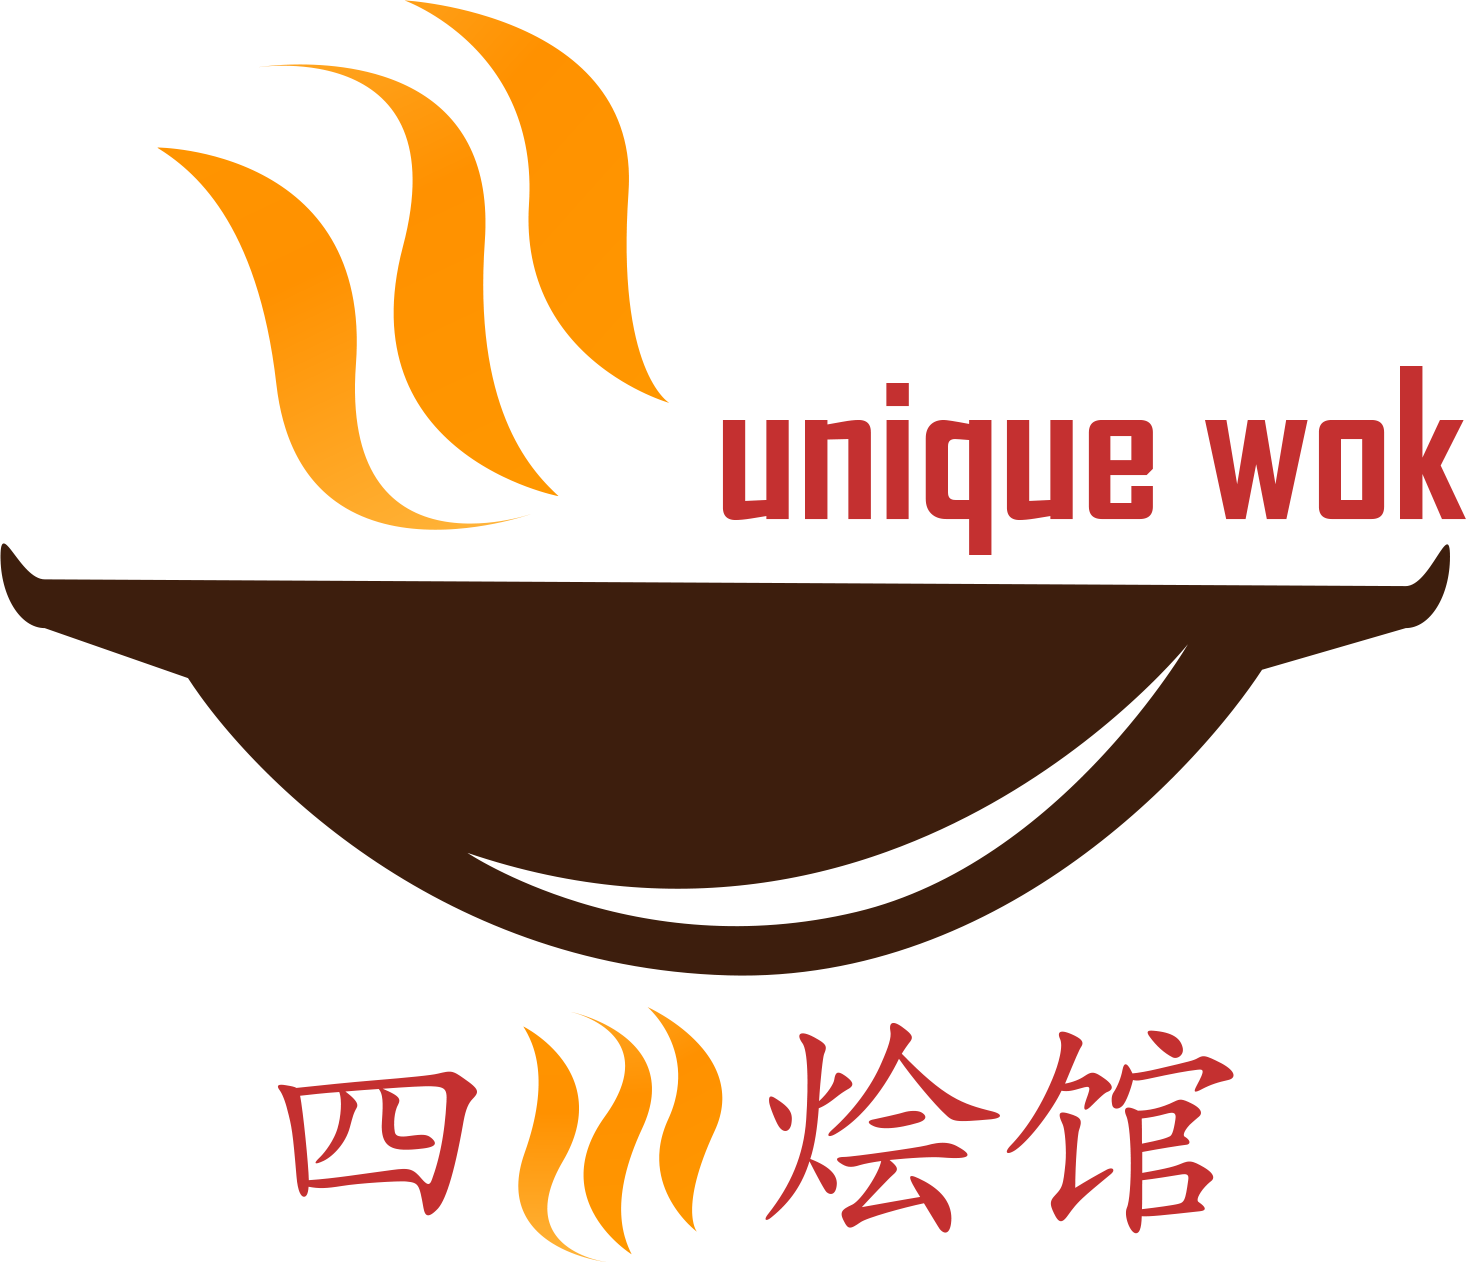 Unique Wok - Chinese Restaurant - Unique Wok - Chinese Restaurant (1466x1262)